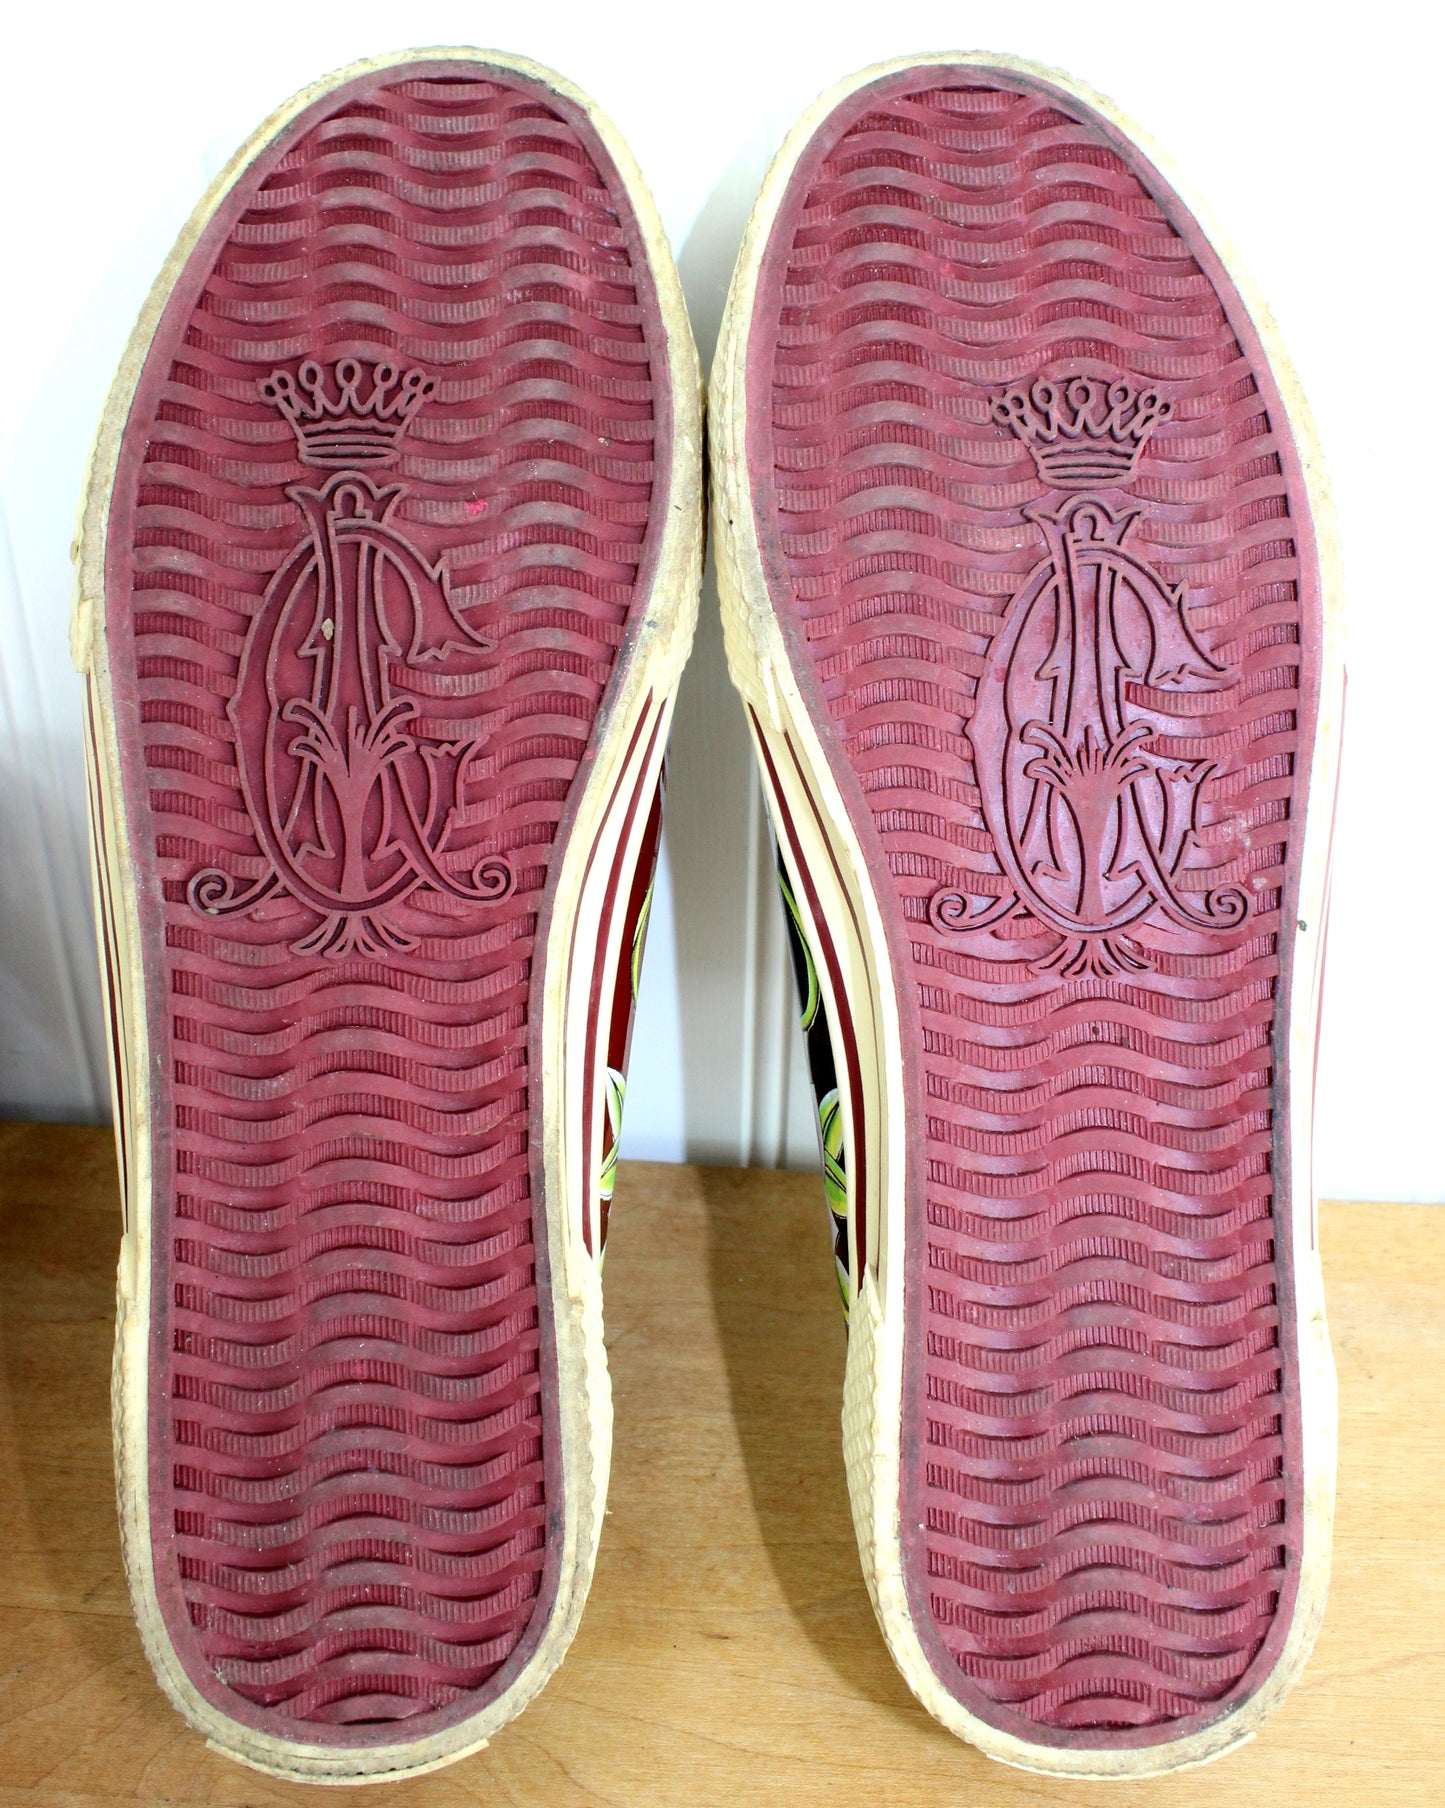 Christian Audigier Leather Shoes 195 Est. Charmed Life Skull Crossbones Rhinestones Flowers Women's 8 artistic soles